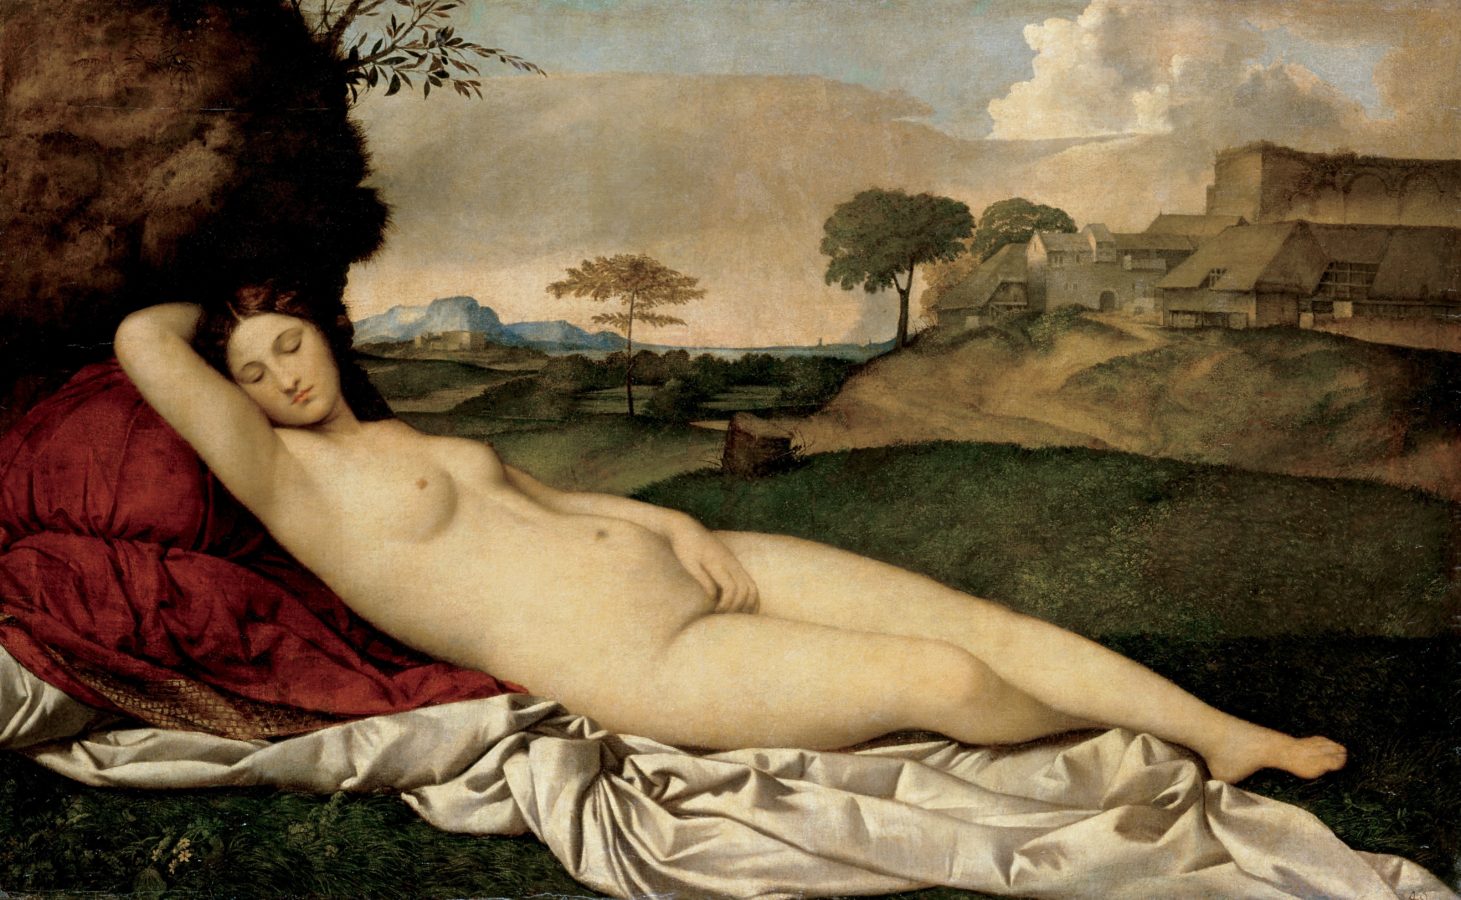 Art of Maki Na Kamura: Giorgione, Sleeping Venus, 1508, Gemäldegalerie Alte Meister, Dresden, Germany. 